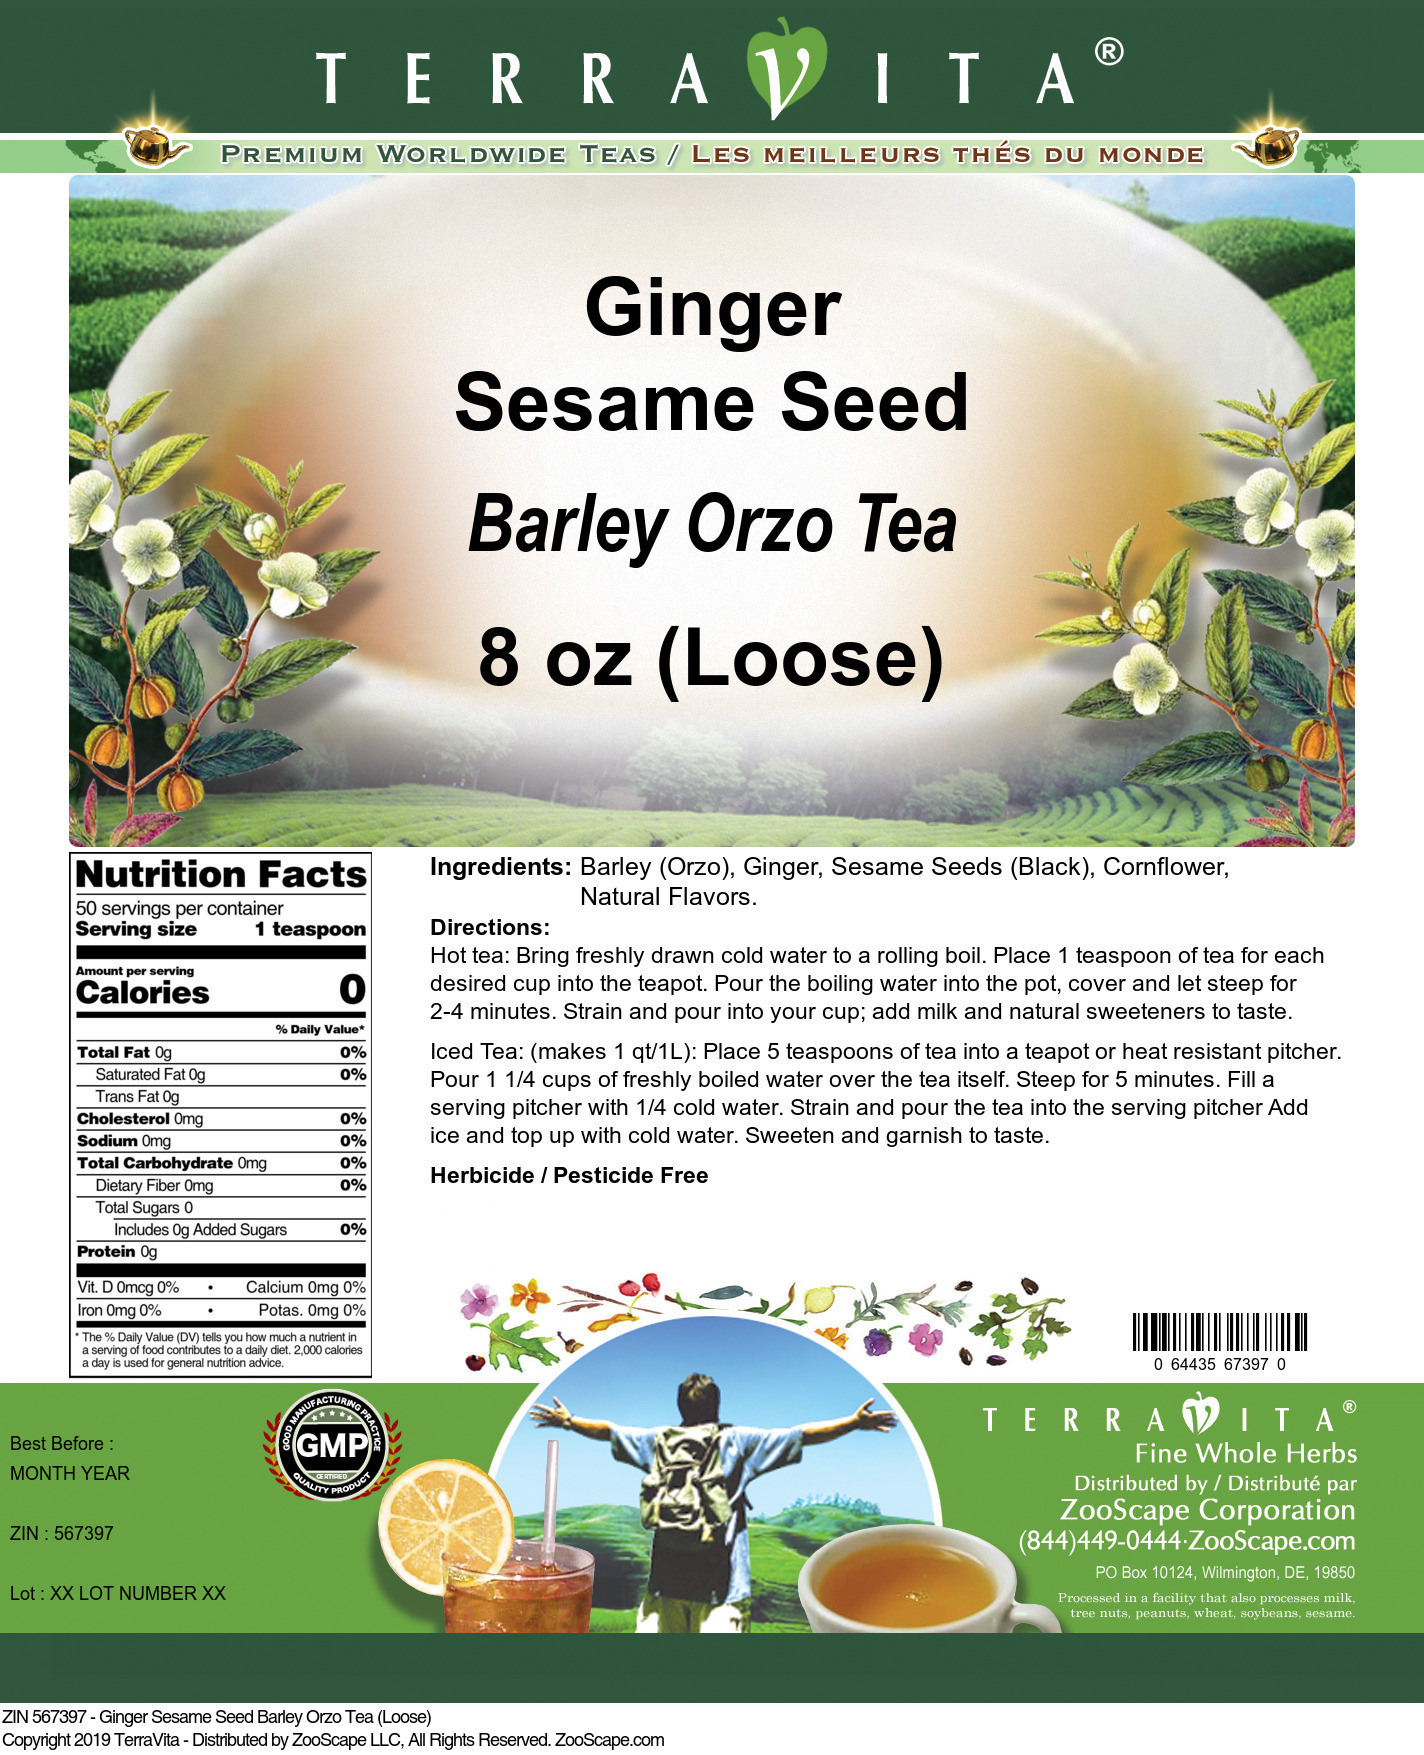 Ginger Sesame Seed Barley Orzo Tea (Loose) - Label